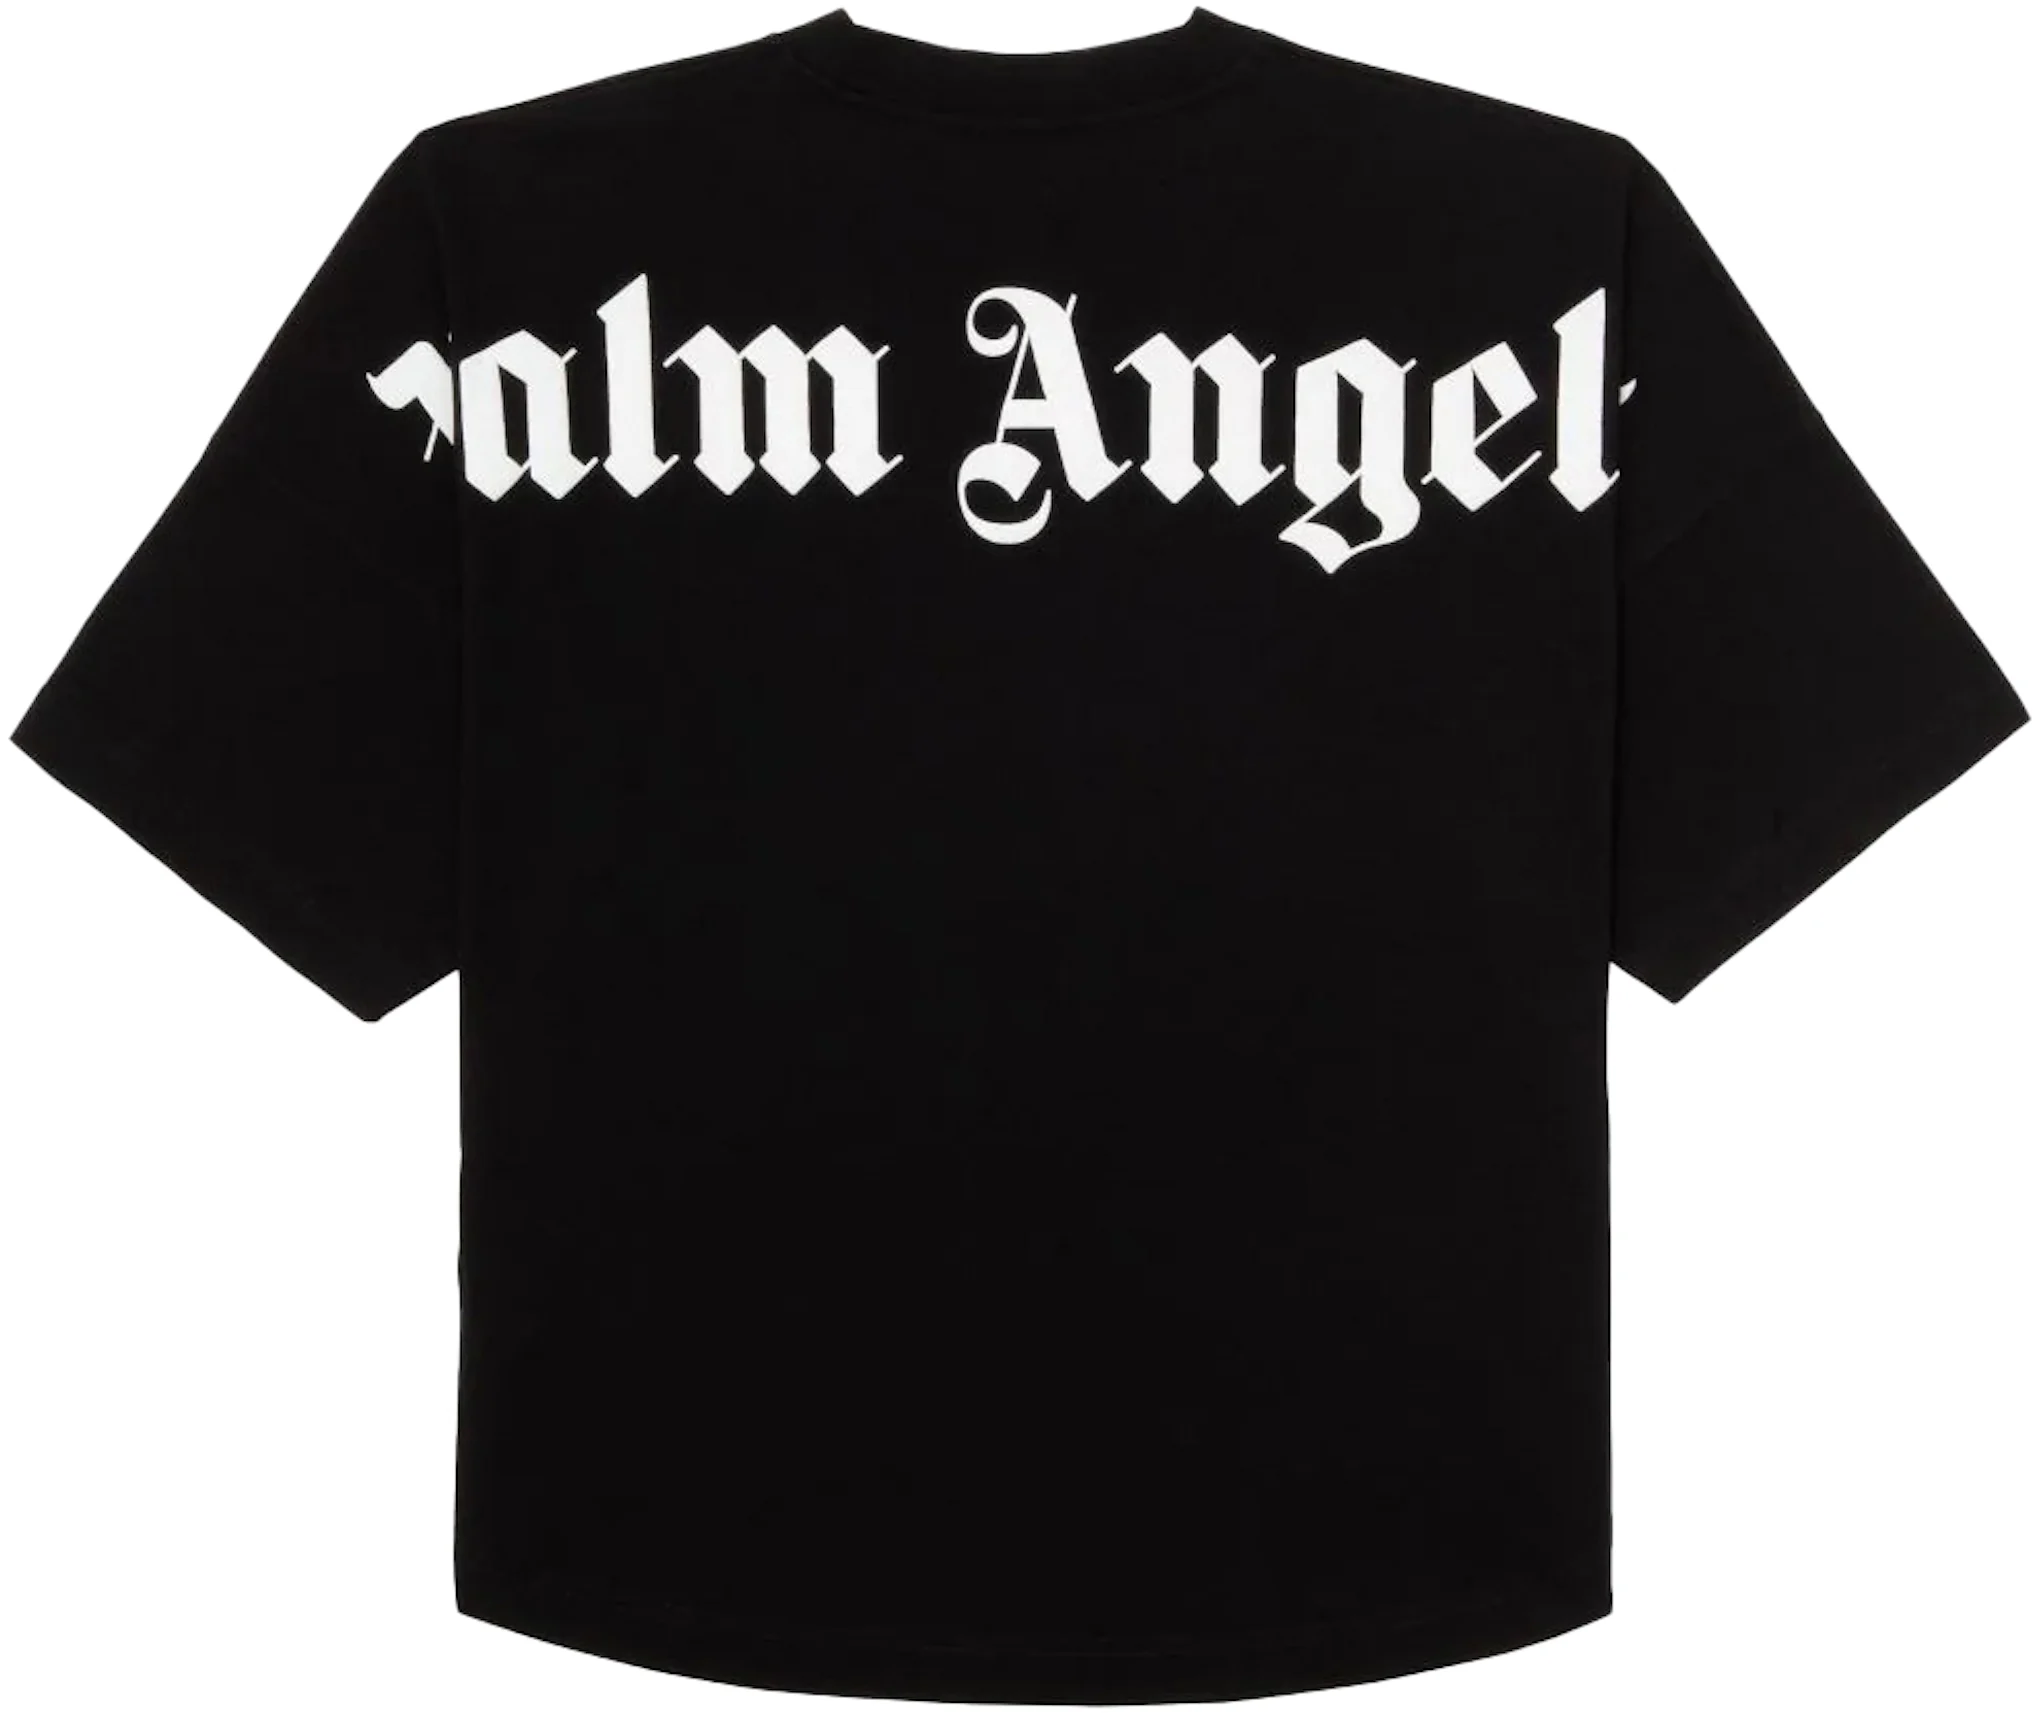 https://images.stockx.com/images/Palm-Angels-Logo-T-Shirt-Black.jpg?fit=fill&bg=FFFFFF&w=1200&h=857&fm=webp&auto=compress&dpr=2&trim=color&updated_at=1620241099&q=60